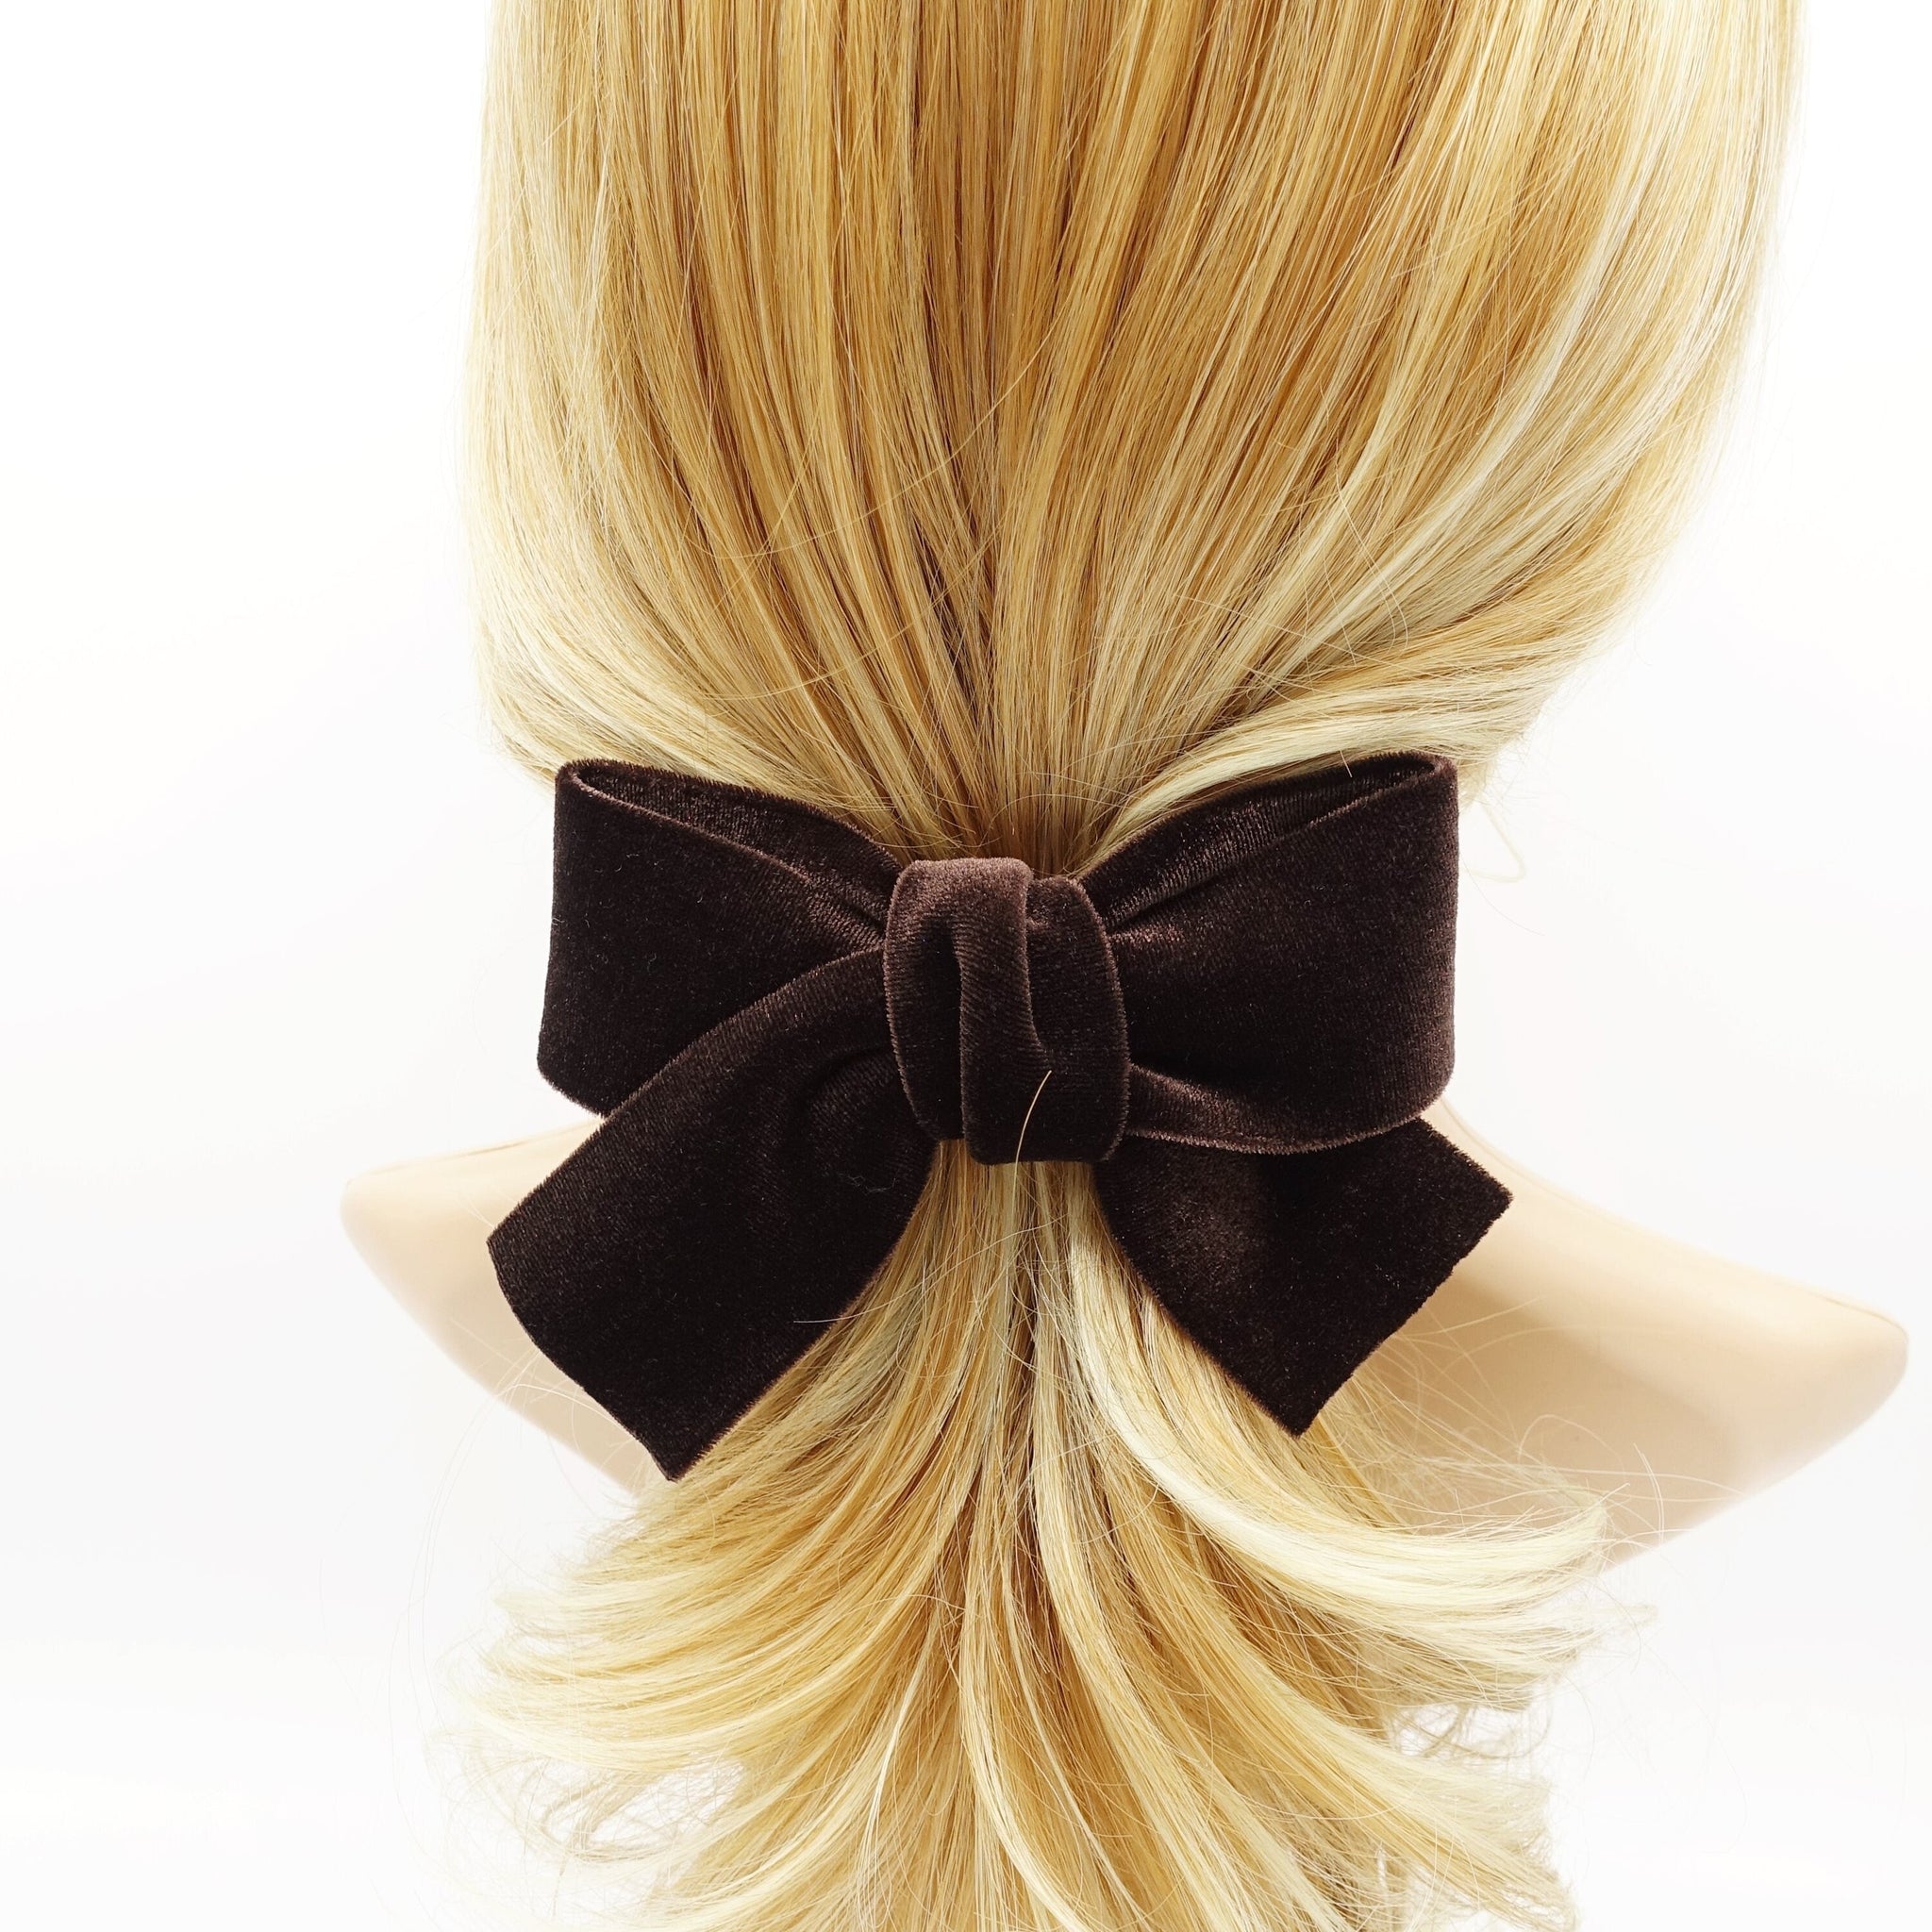 veryshine.com Barrette (Bow) Brown medium velvet cross bow french barrette basic Fall Winter hair accessory